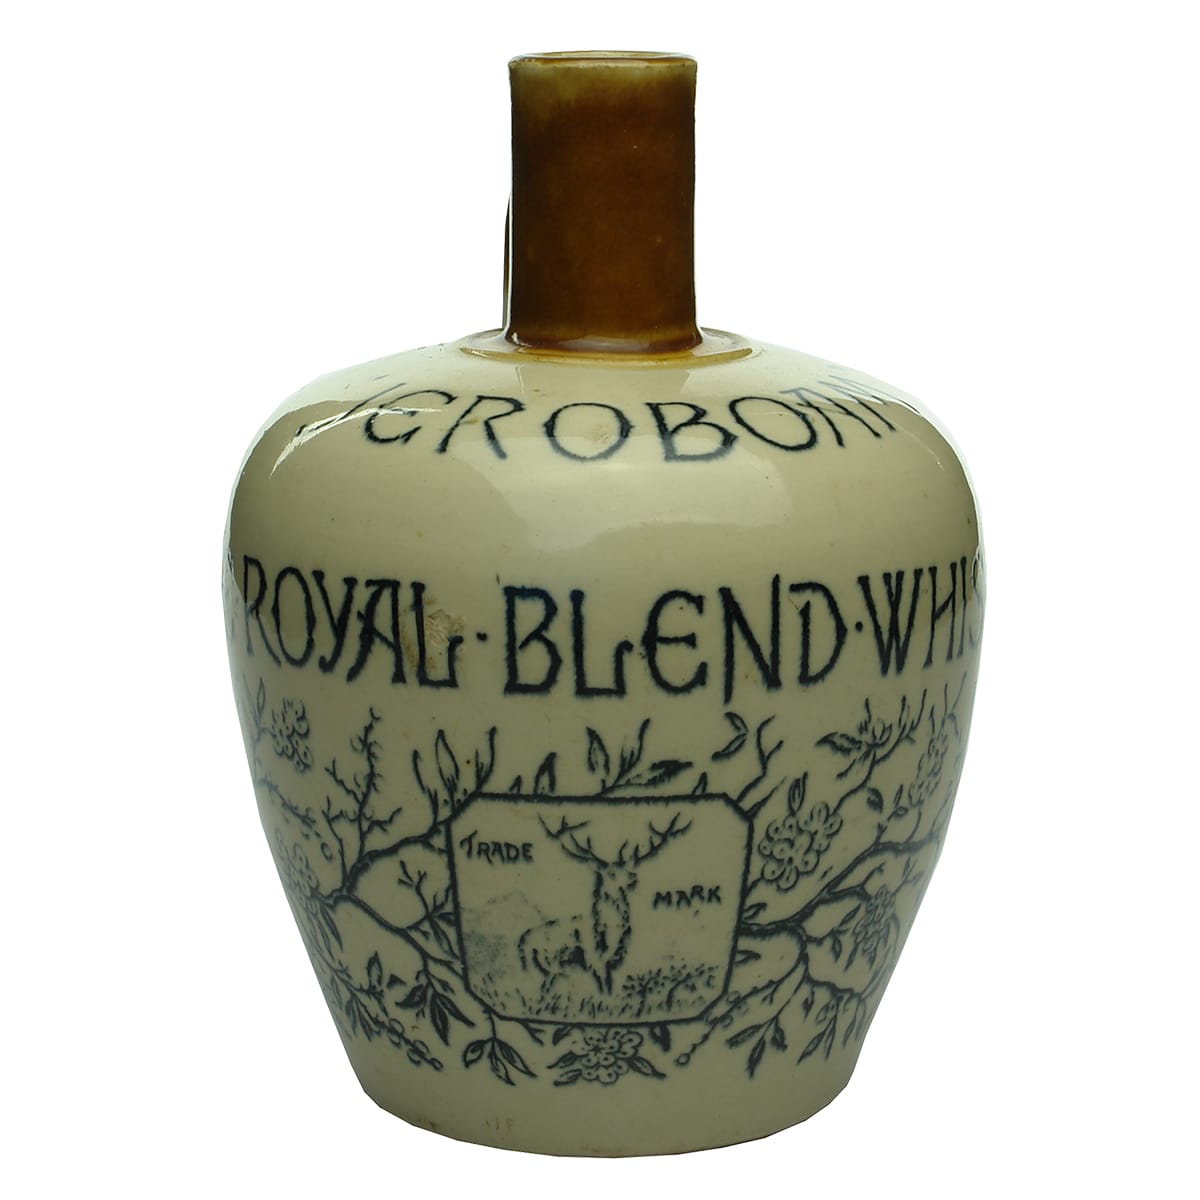 Thomson, Glasgow. Jeroboam, Royal Blend Whisky. Stoneware Jug. Stag Trade mark.